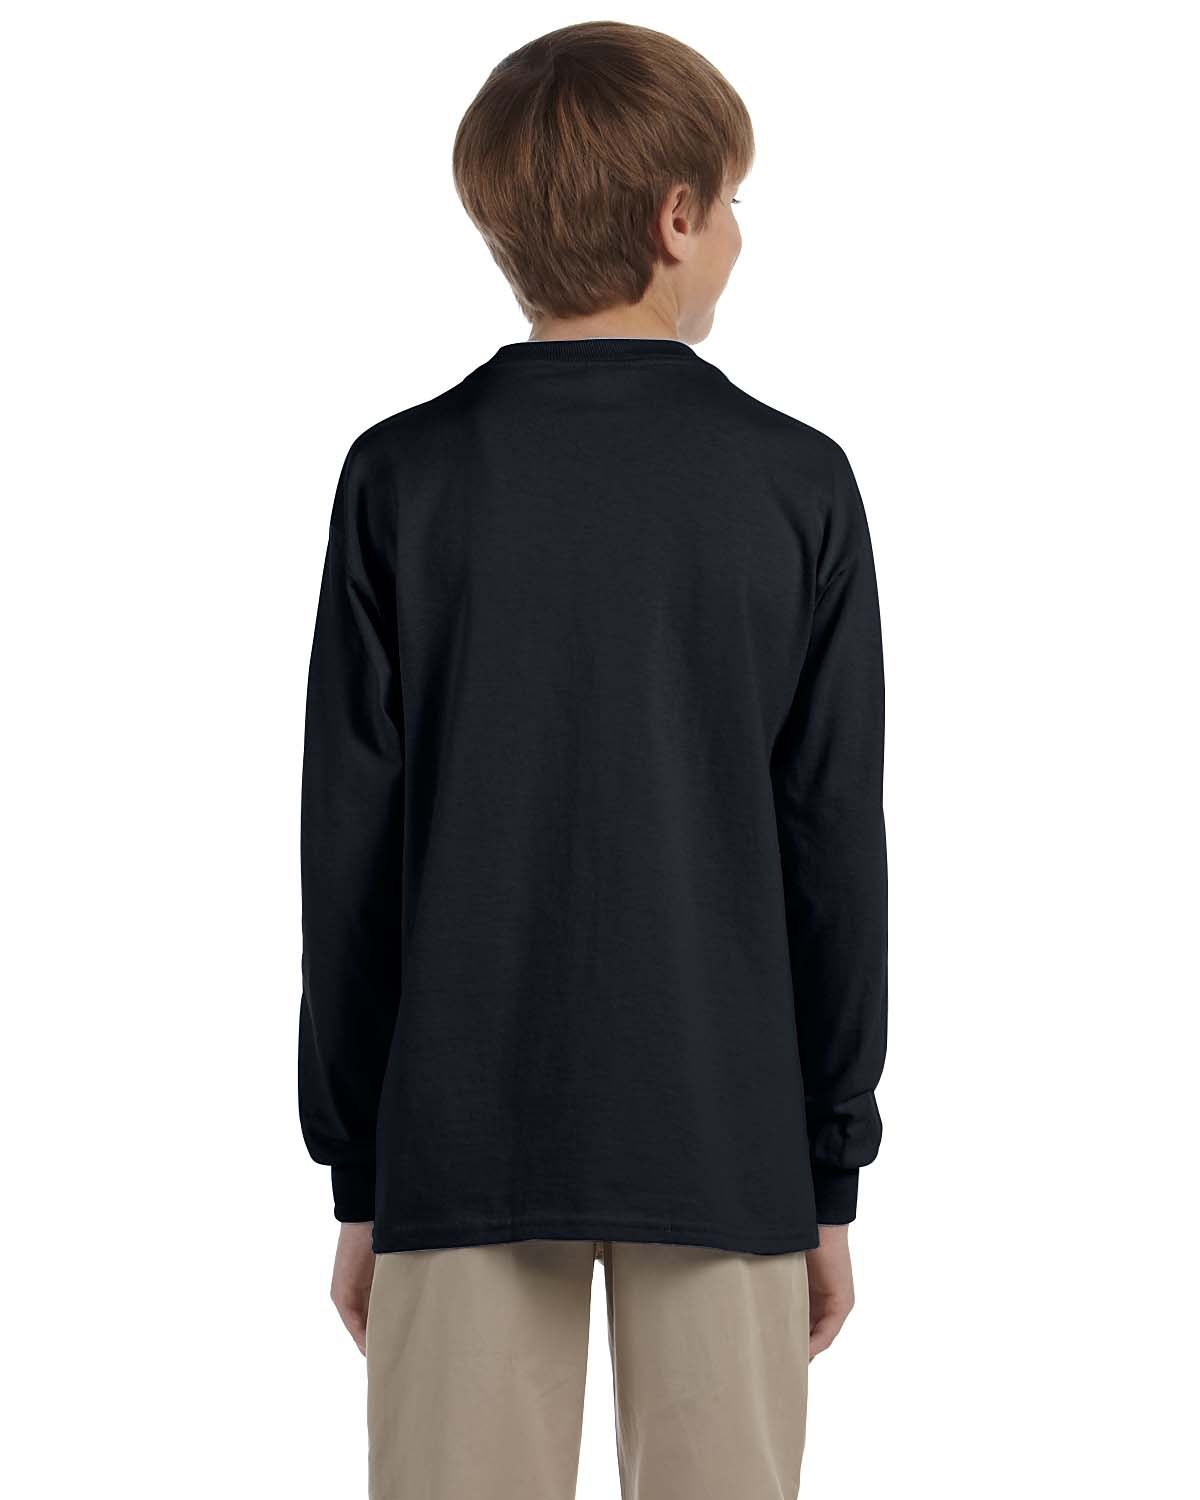 Jerzees Youth DRI-POWER® ACTIVE Long-Sleeve T-Shirt